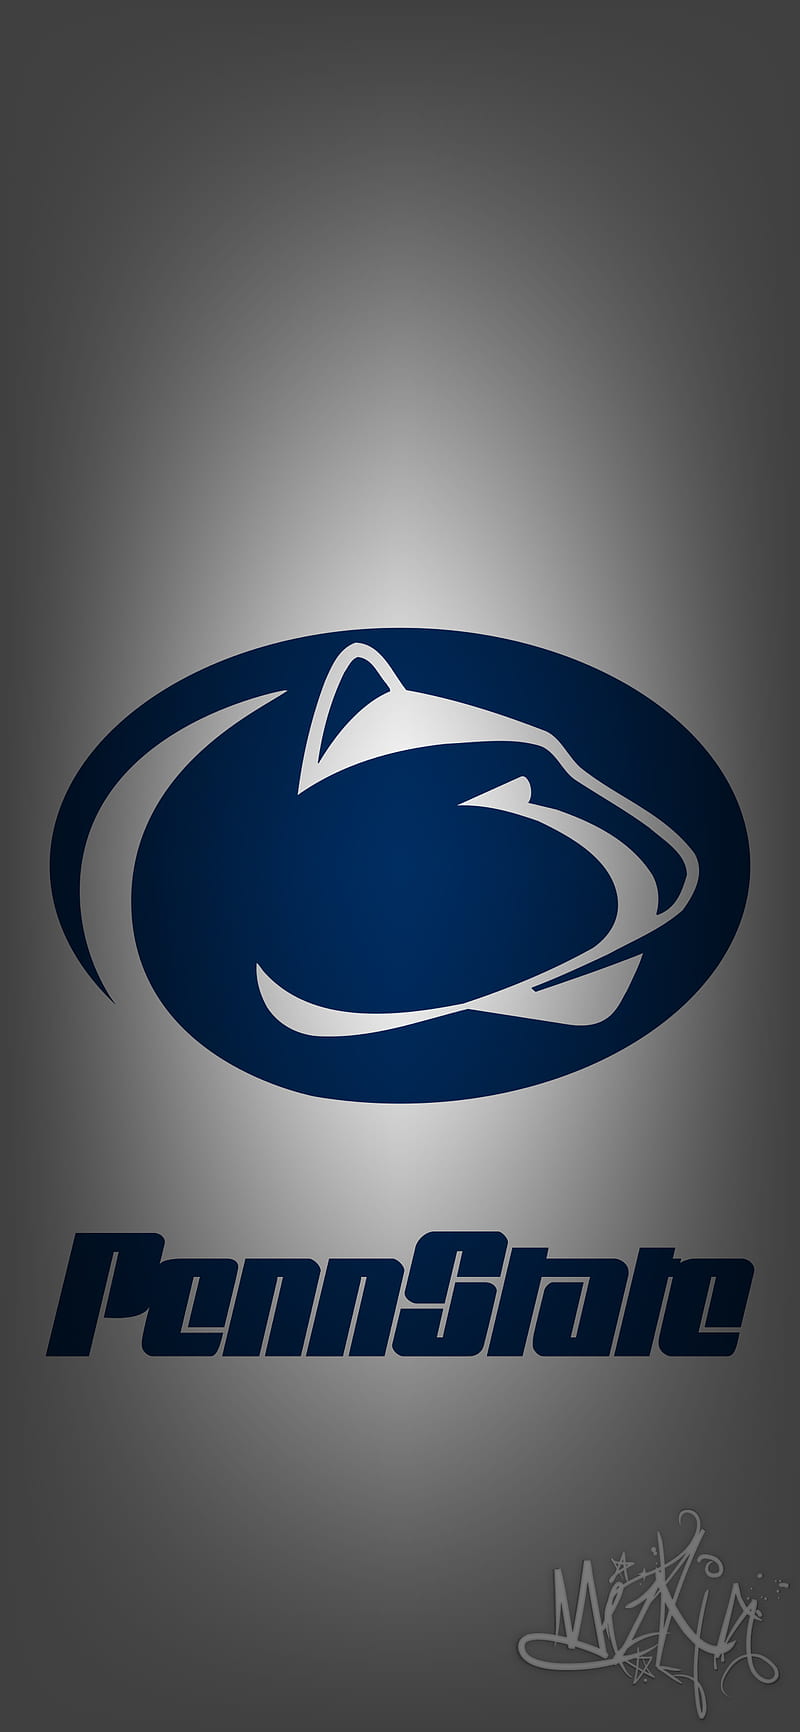 Penn State Wallpaper - NawPic